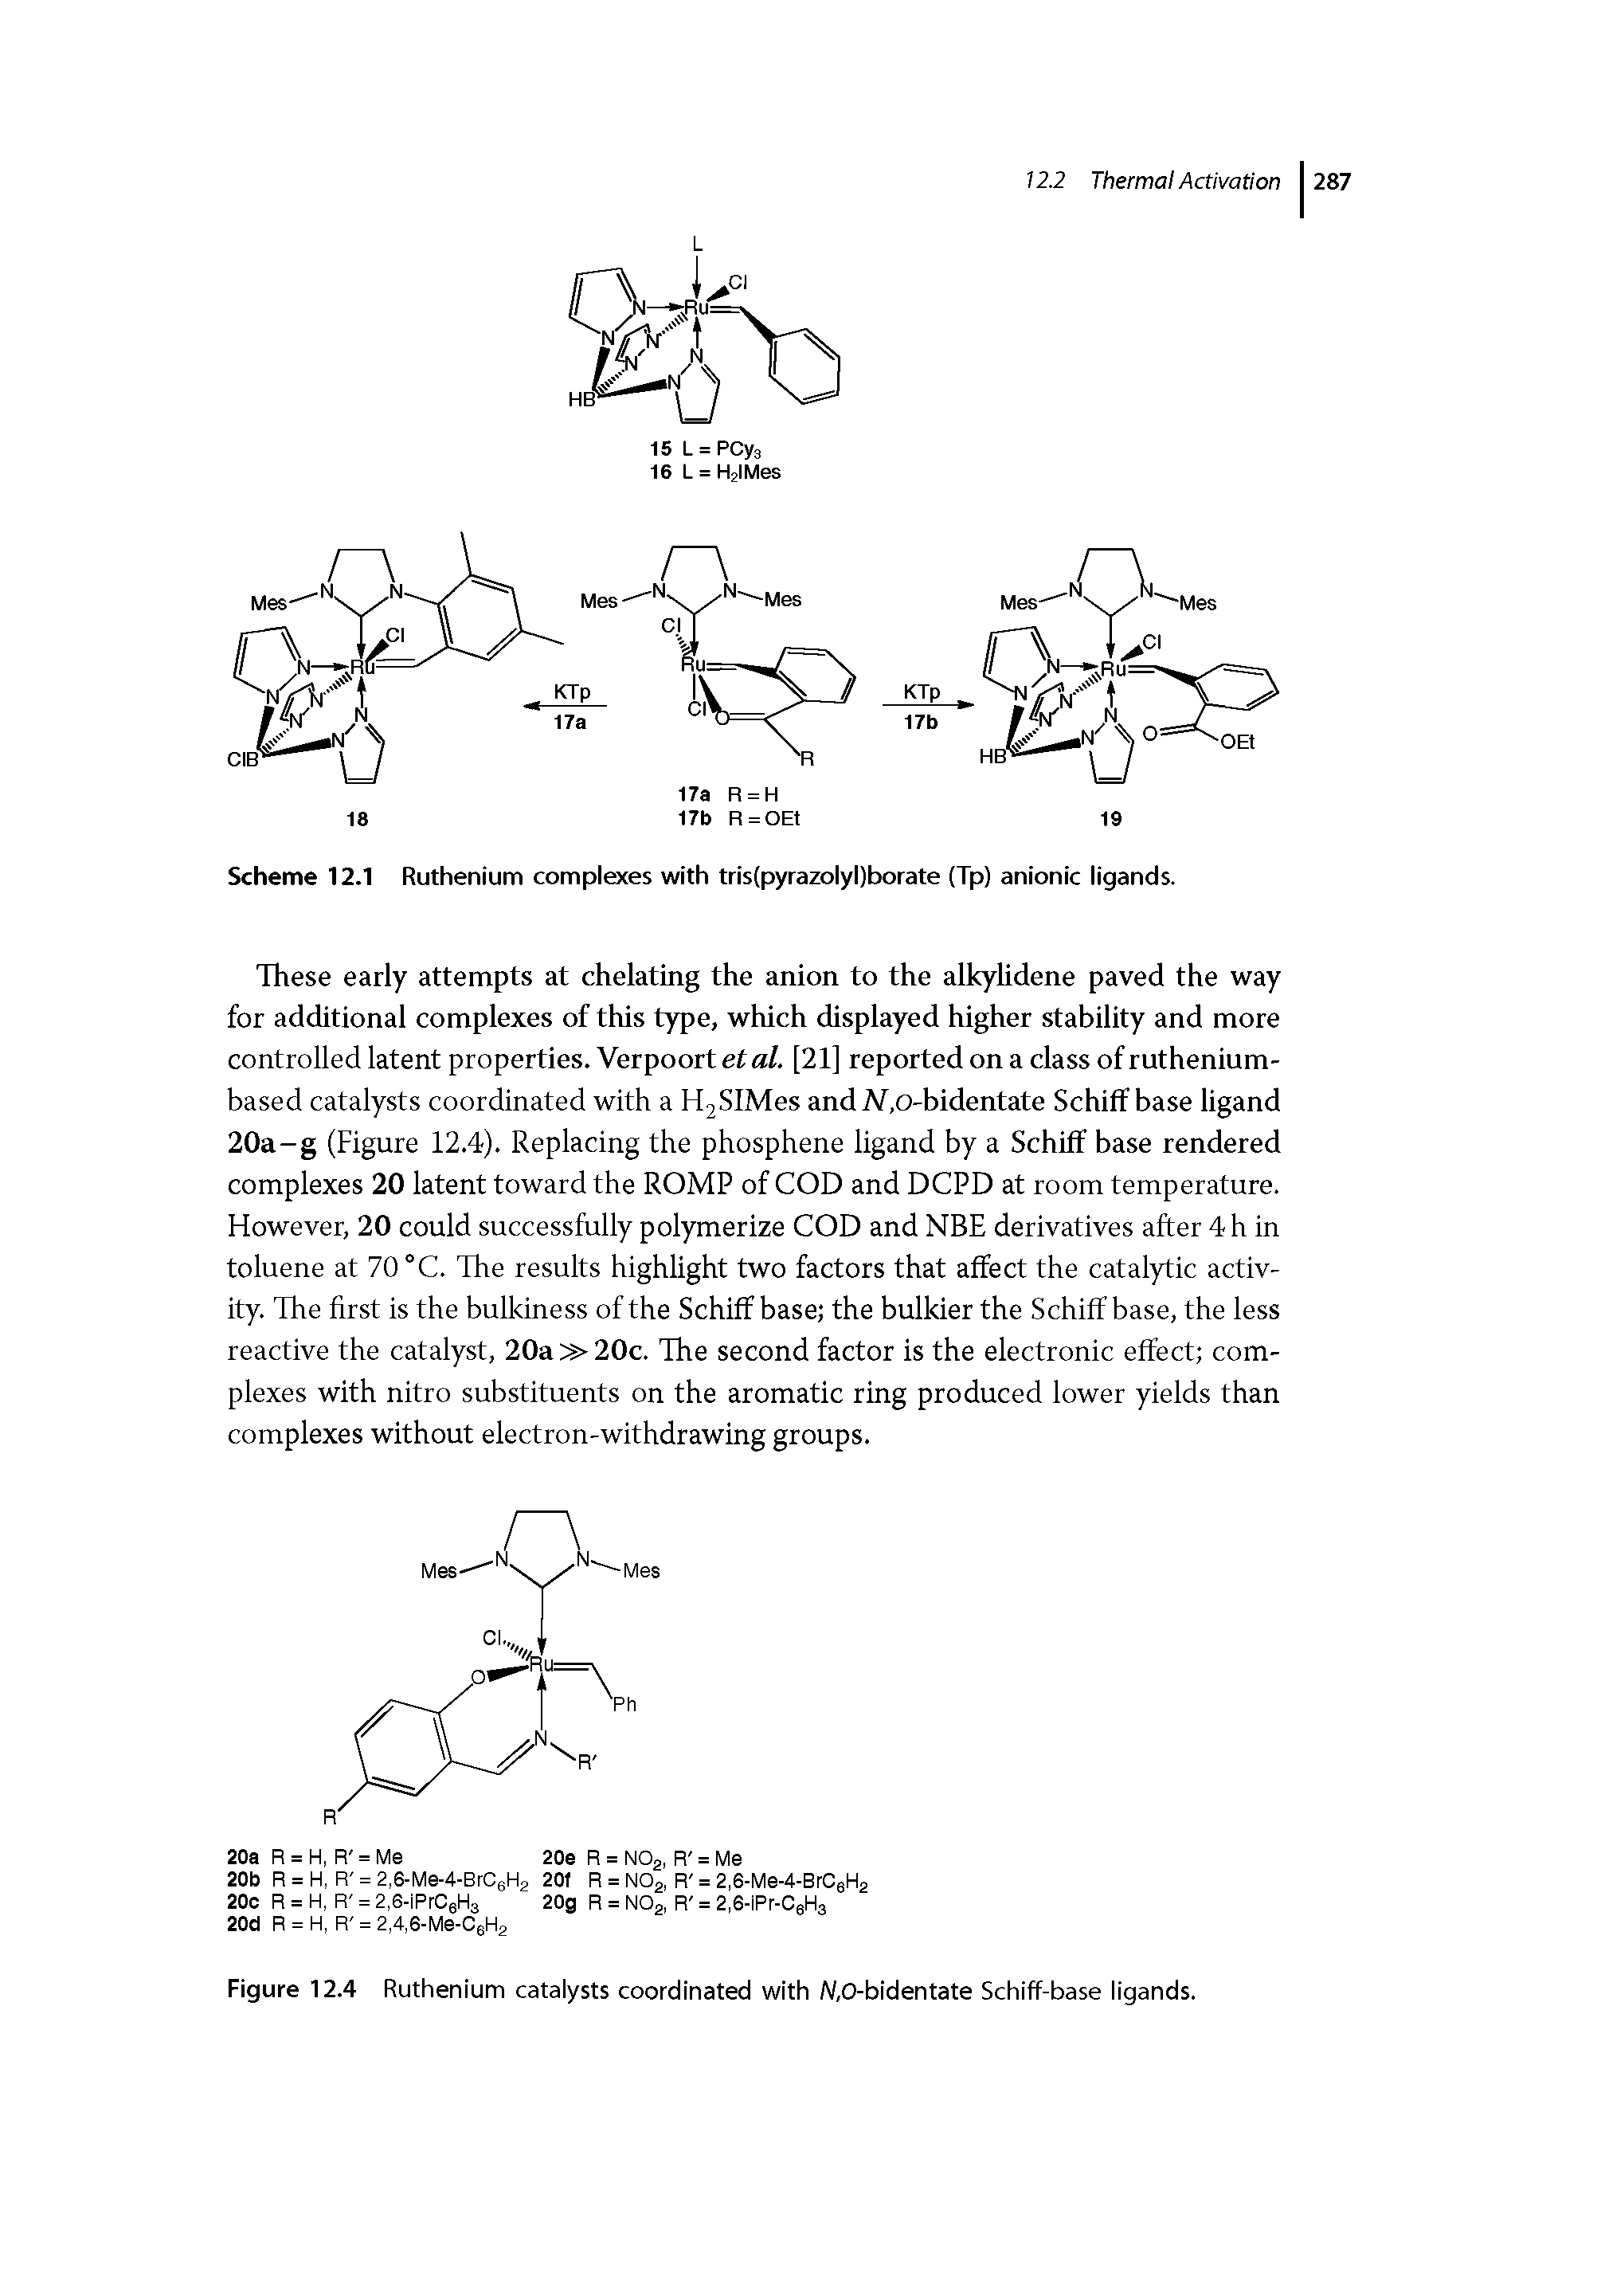 Scheme 12.1 Ruthenium complexes with tris(pyrazolyl)borate (Tp) anionic ligands.